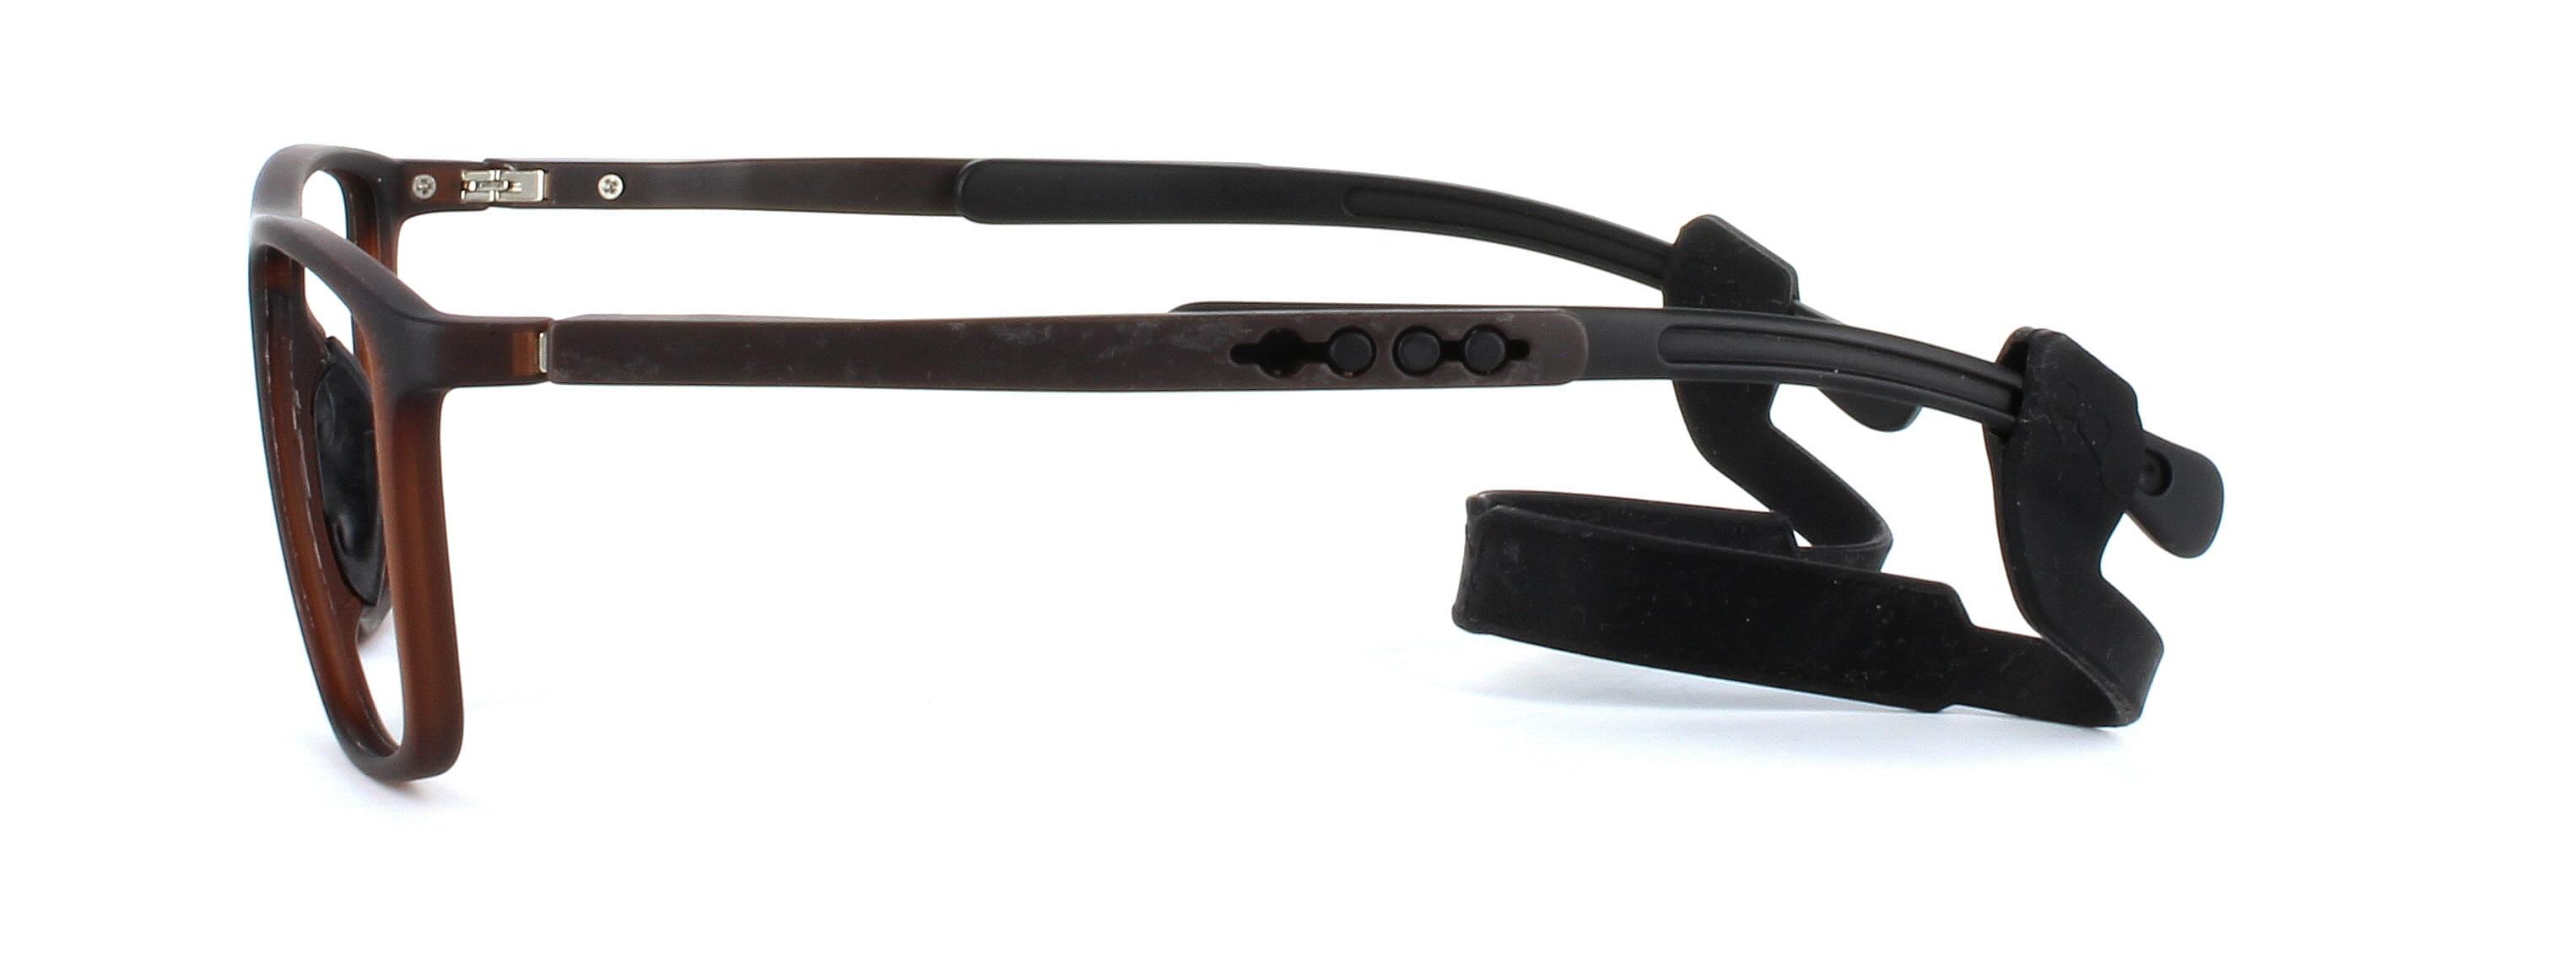 Decathlon - Men's prescription sports glasses frame in brown - image view 2